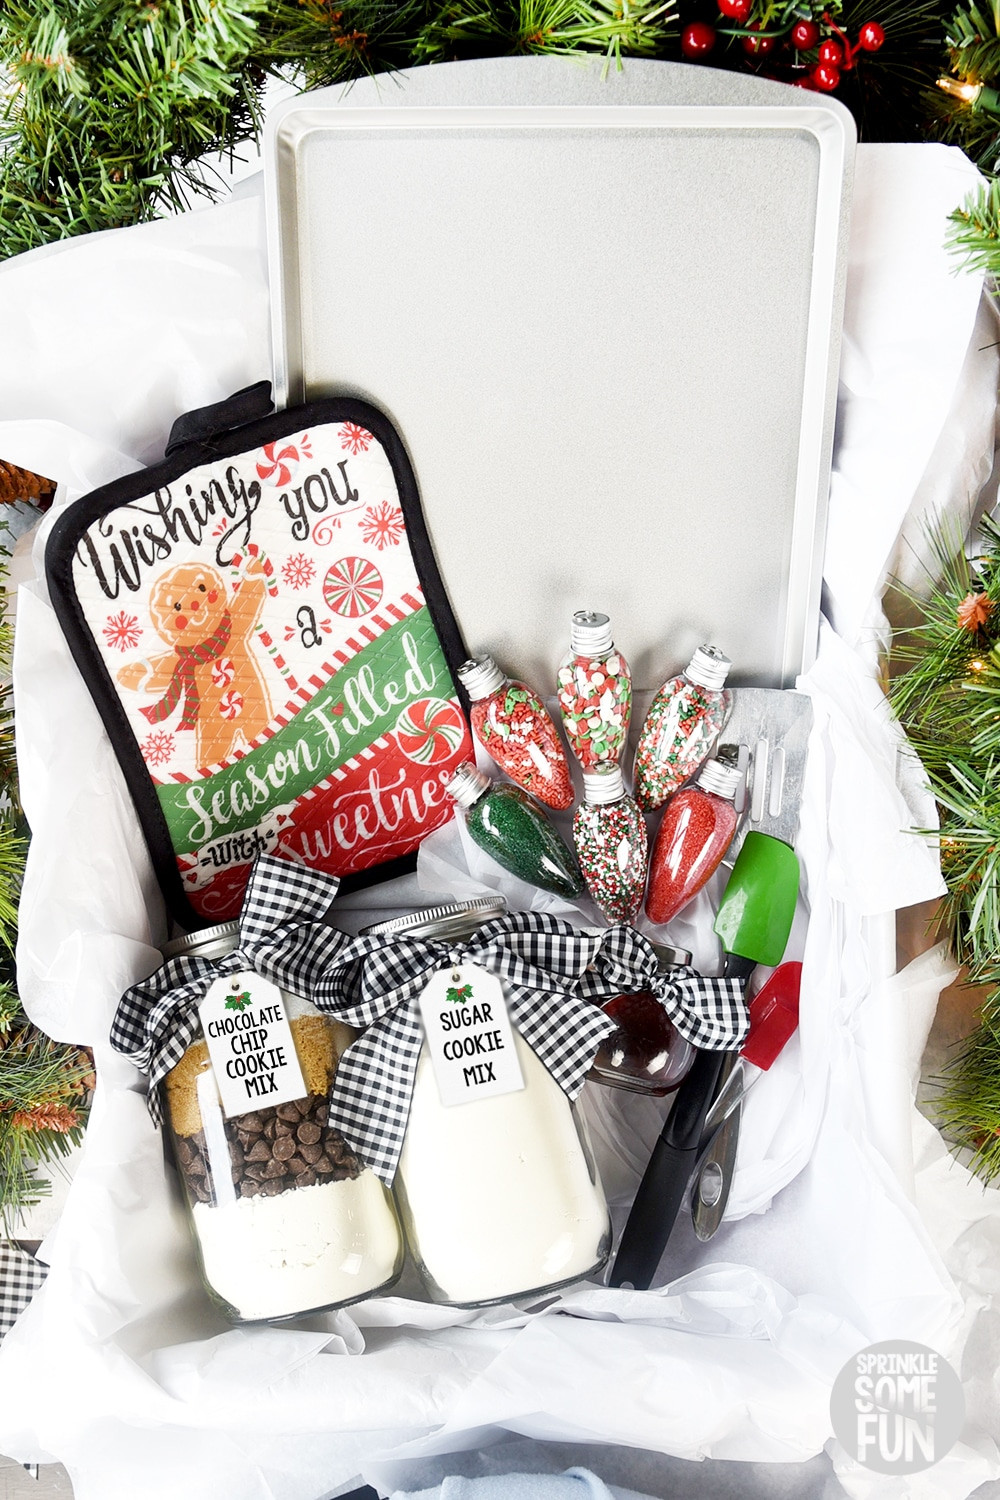 Holiday Baking Gift Ideas
 Christmas Cookie Kit ⋆ Baking Gift ⋆ Sprinkle Some Fun